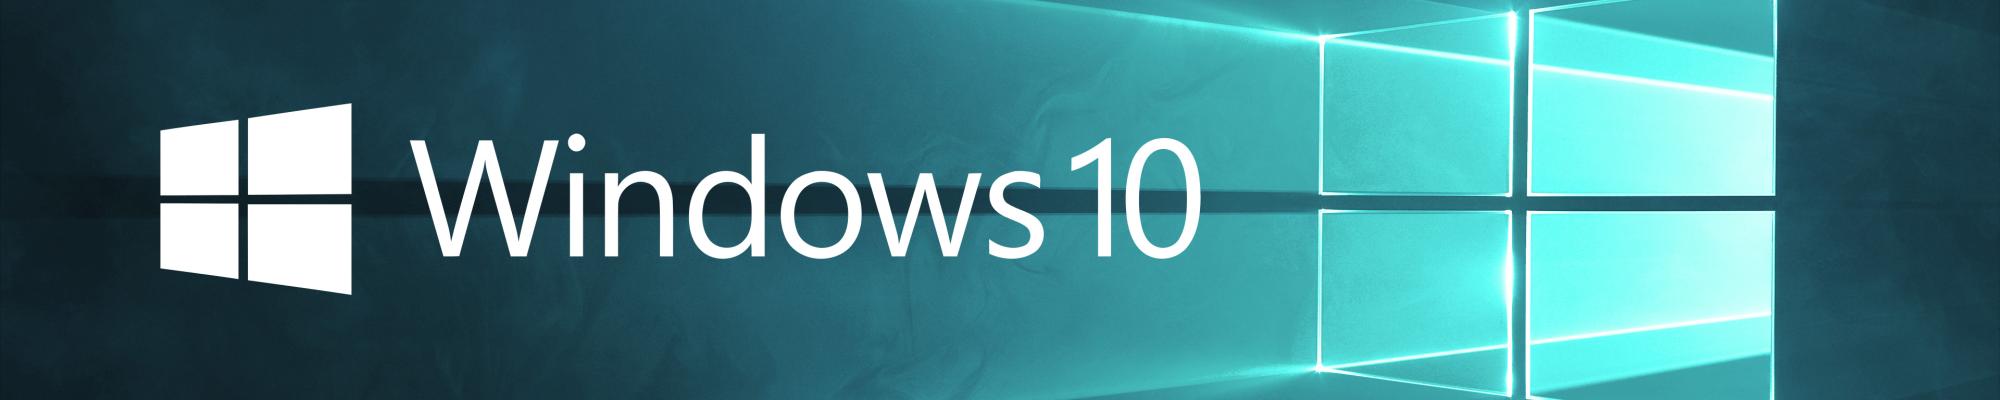 Windows 10, de beste en veiligste Windows ooit